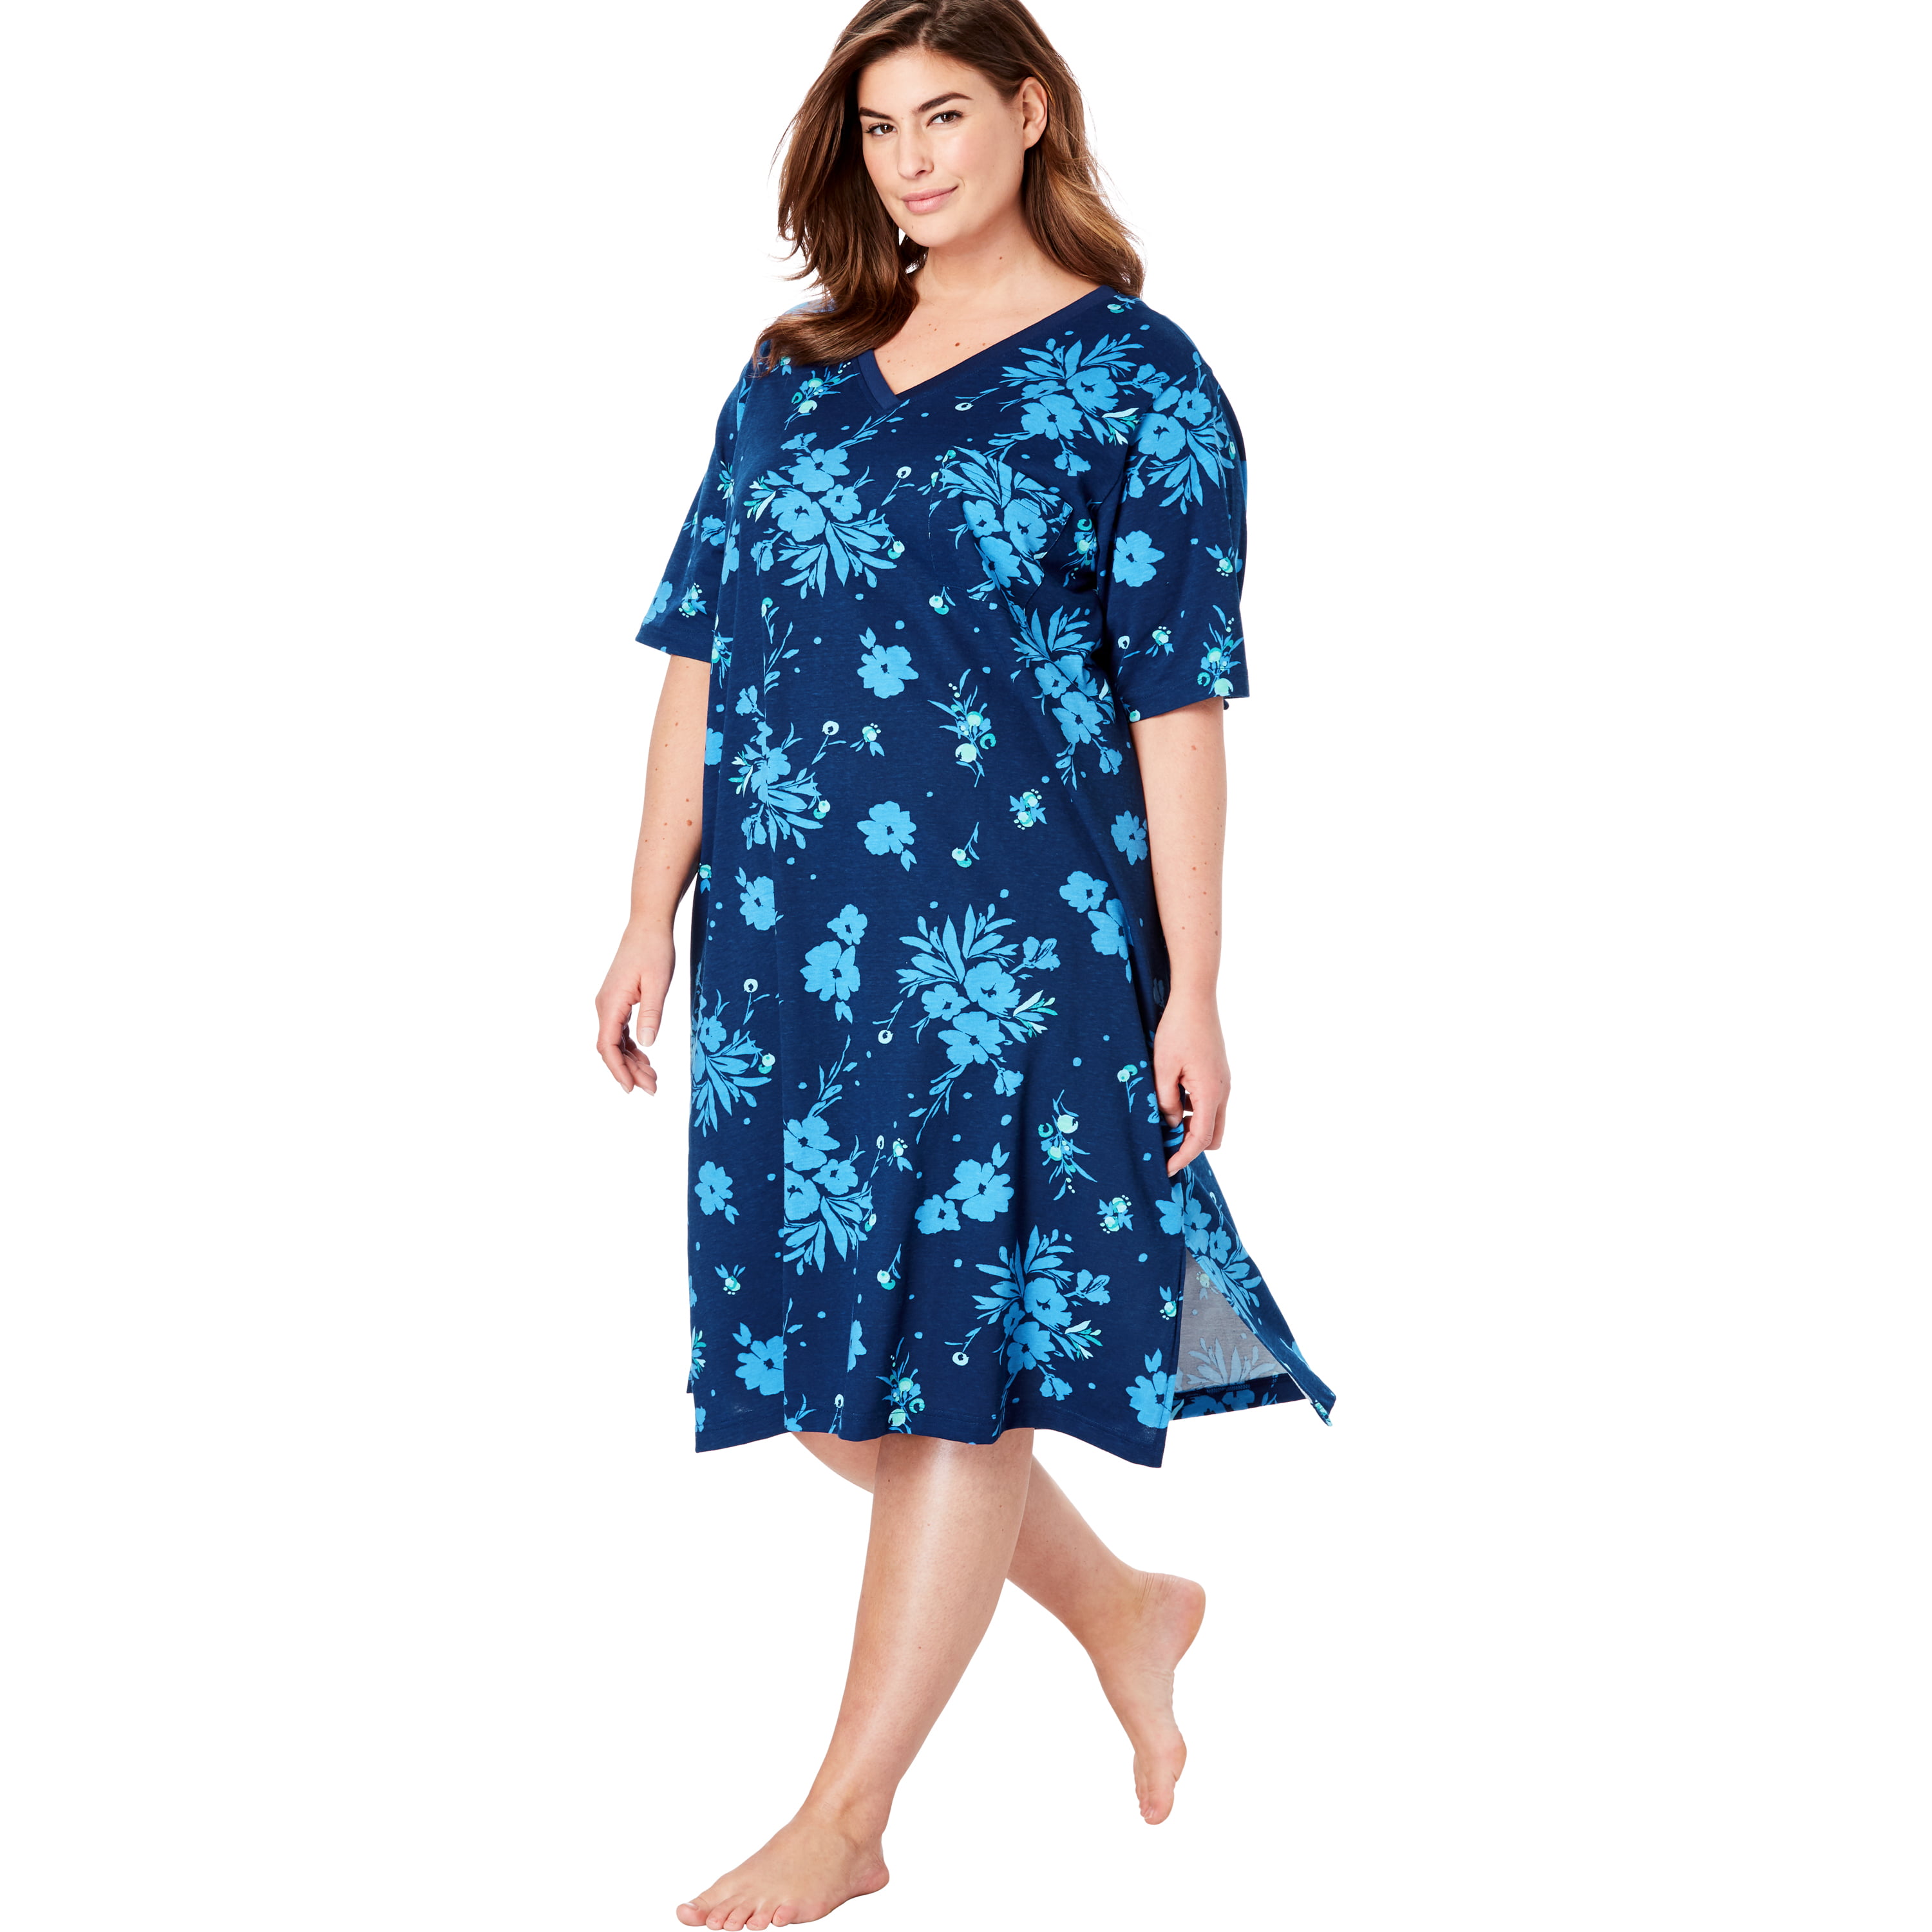 Women's Plus Size Print Sleepshirt Nightgown Dreams & Co 